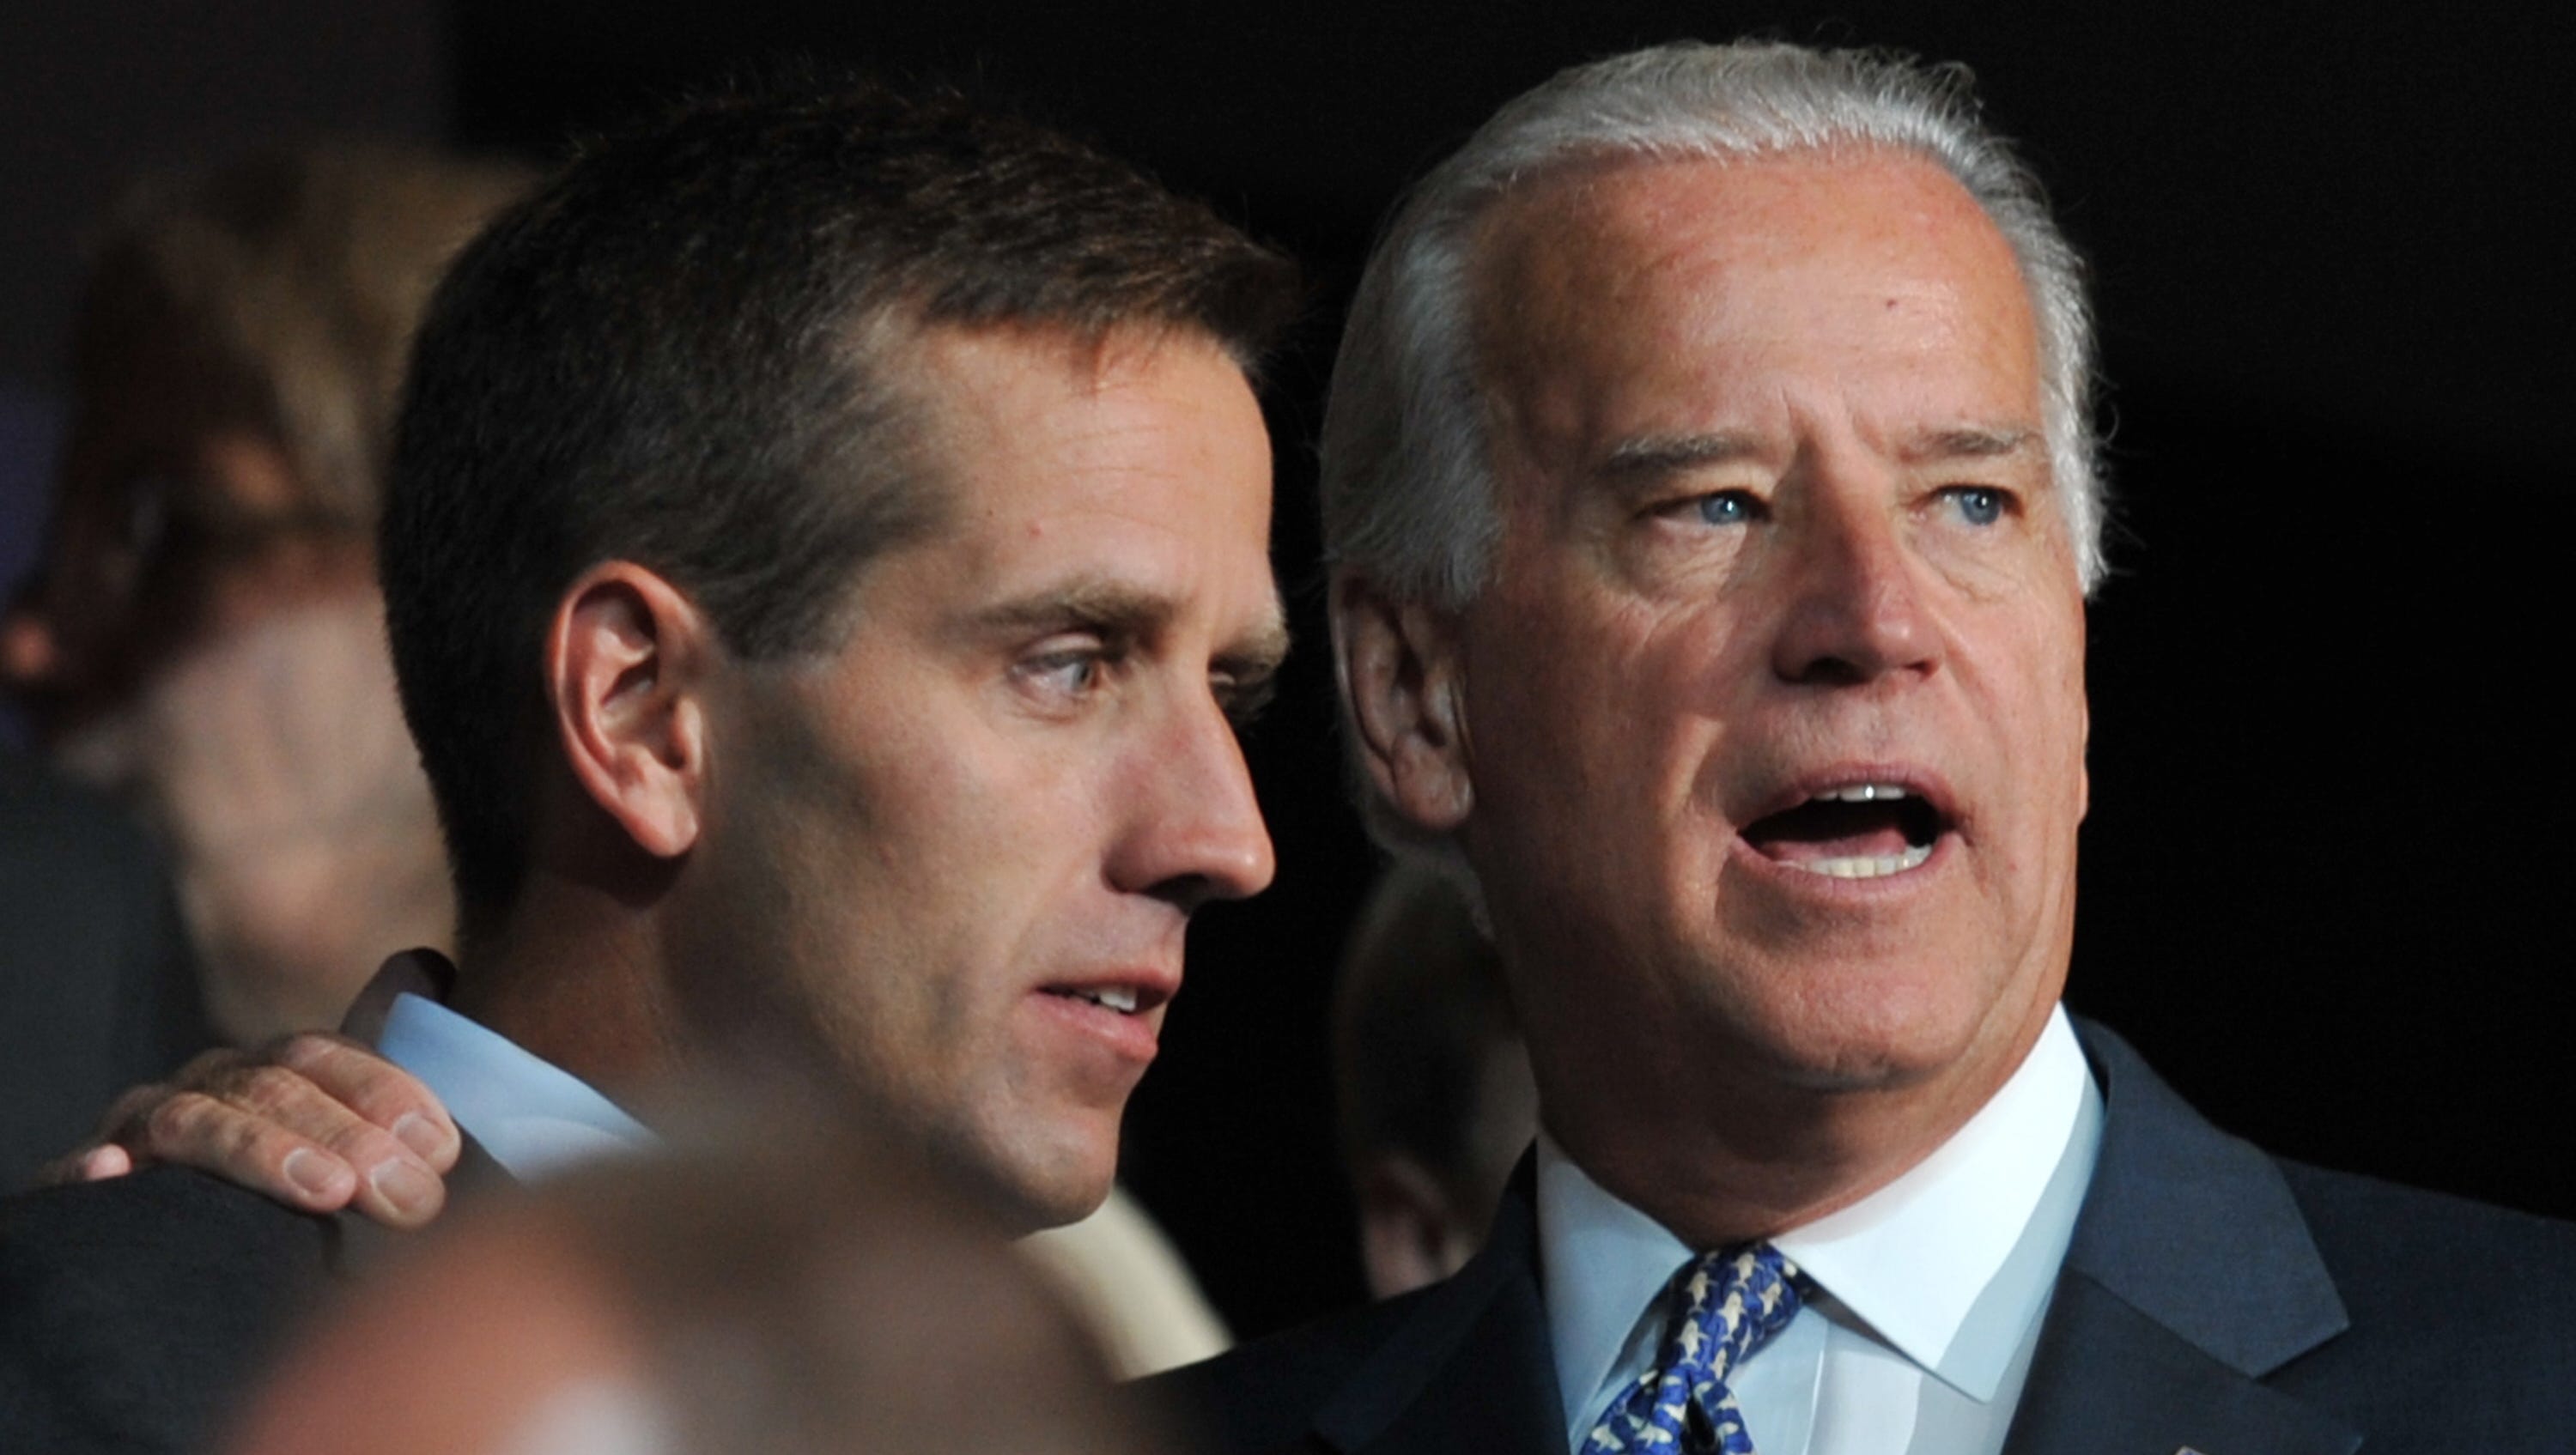 Beau Biden, son vice president, dies of brain cancer